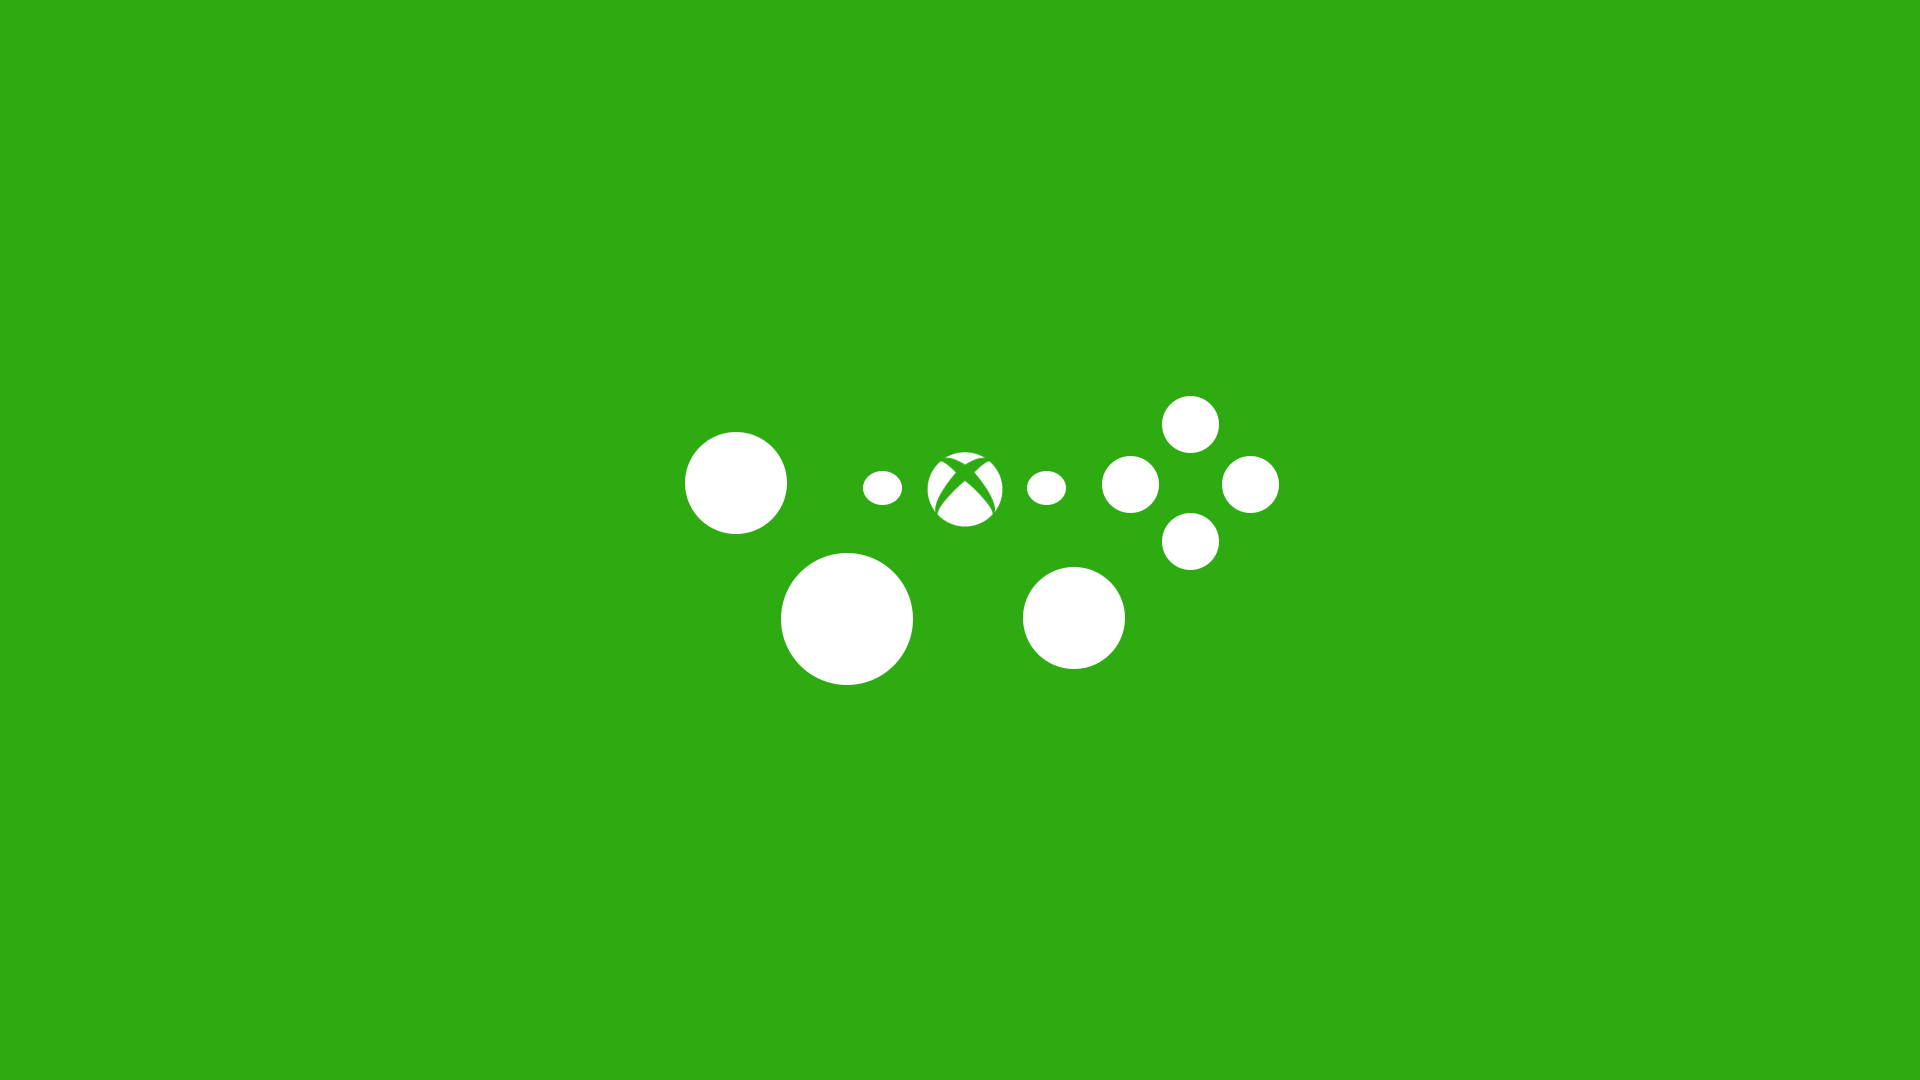 минимализм, яркий зеленый фон, белые кружочки, minimalism, bright green background, white circles